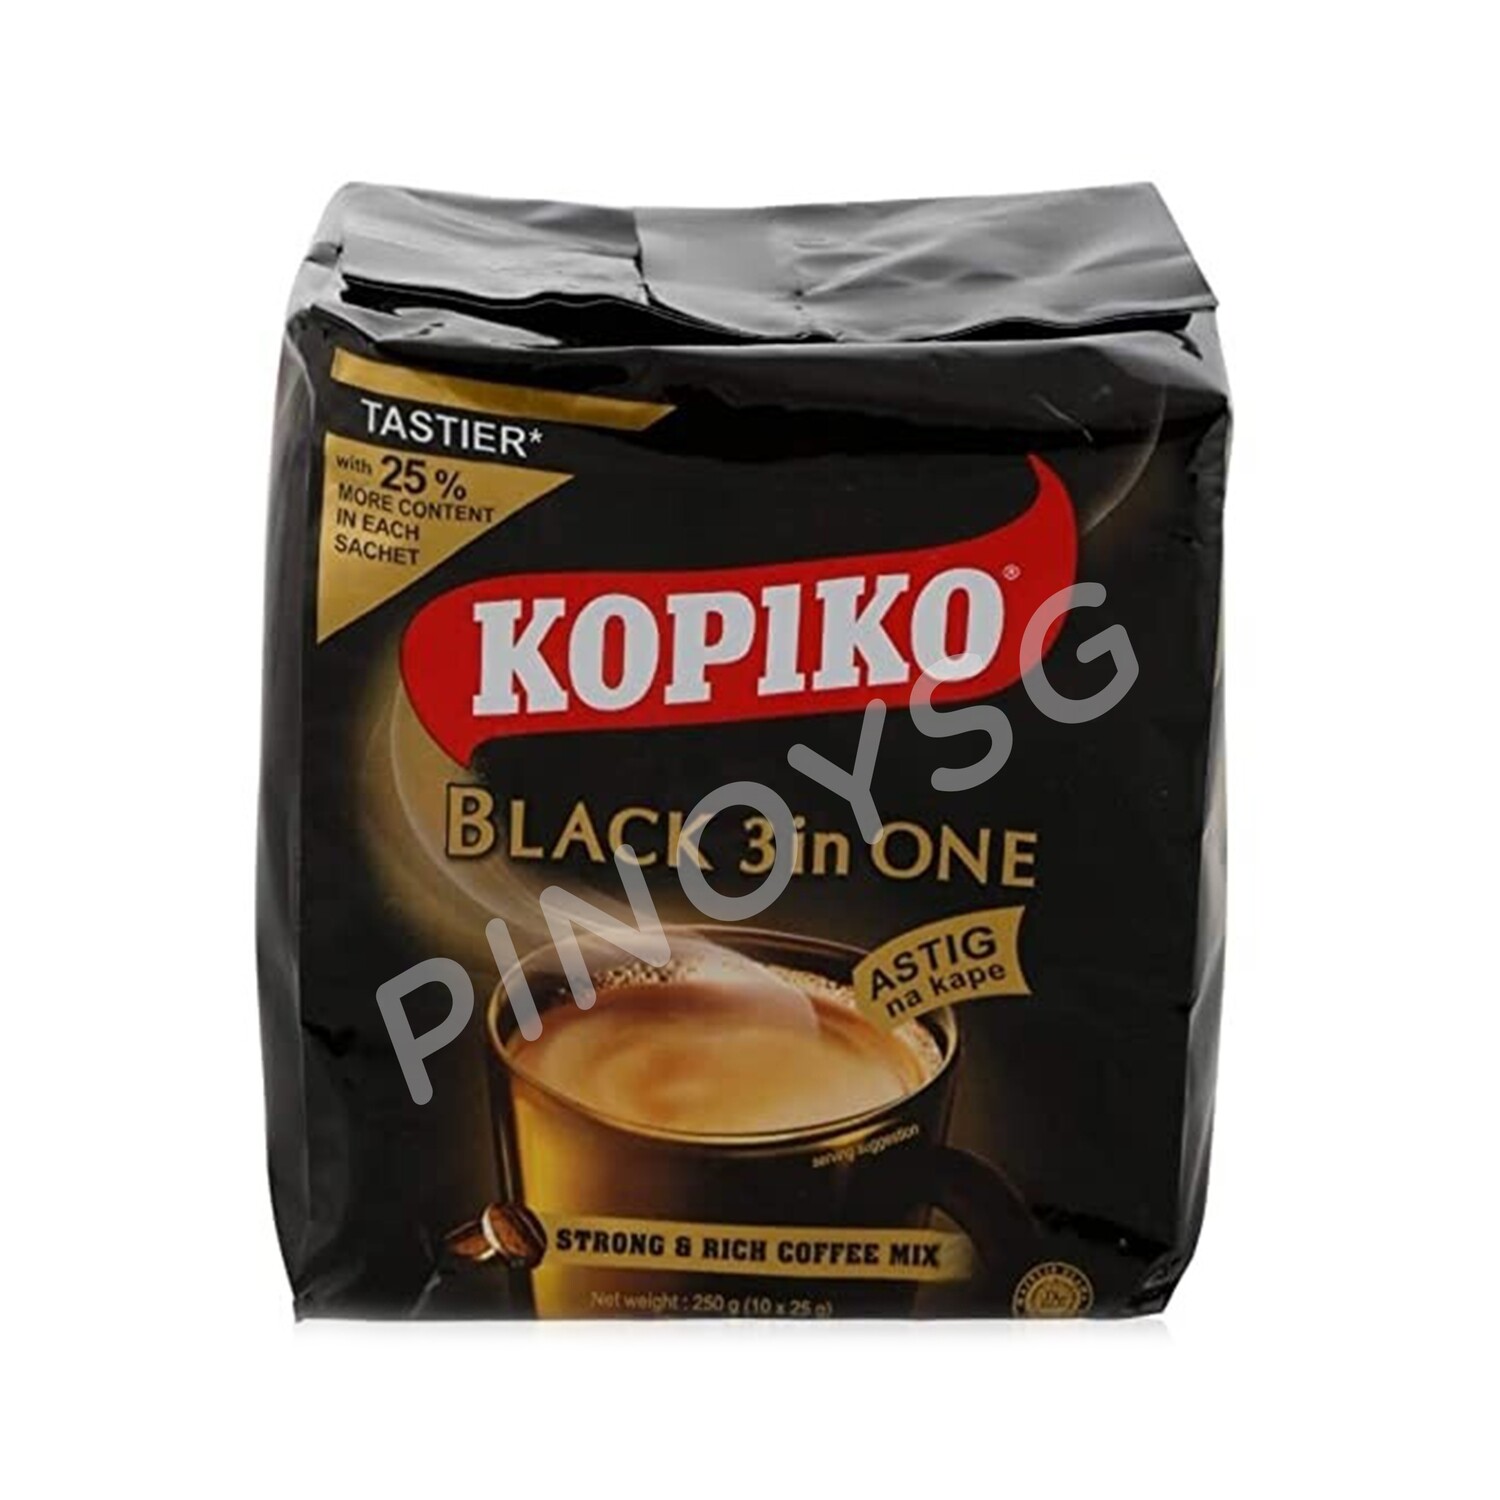 Kopiko Black